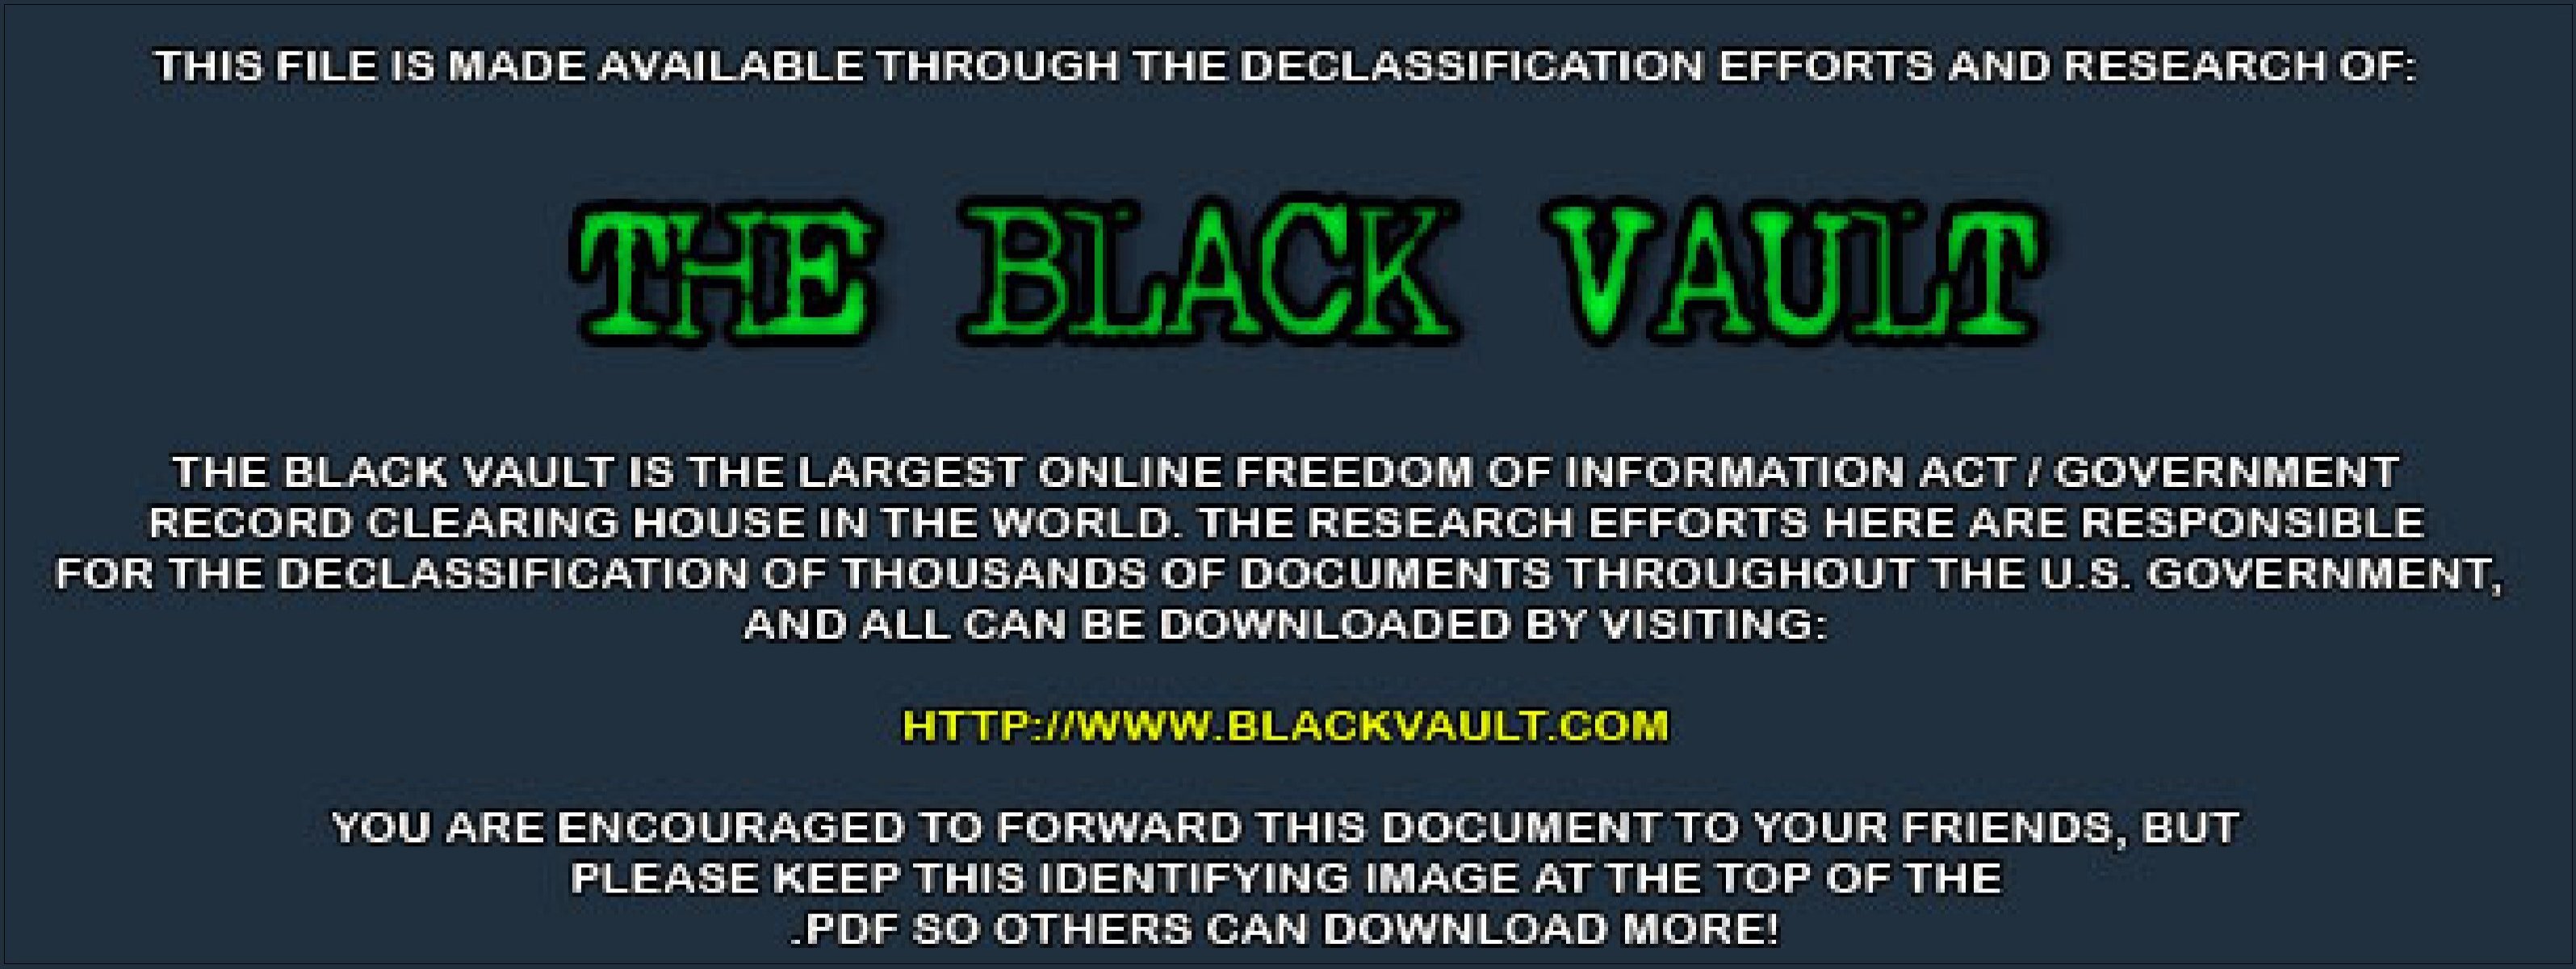 4 - The Black Vault